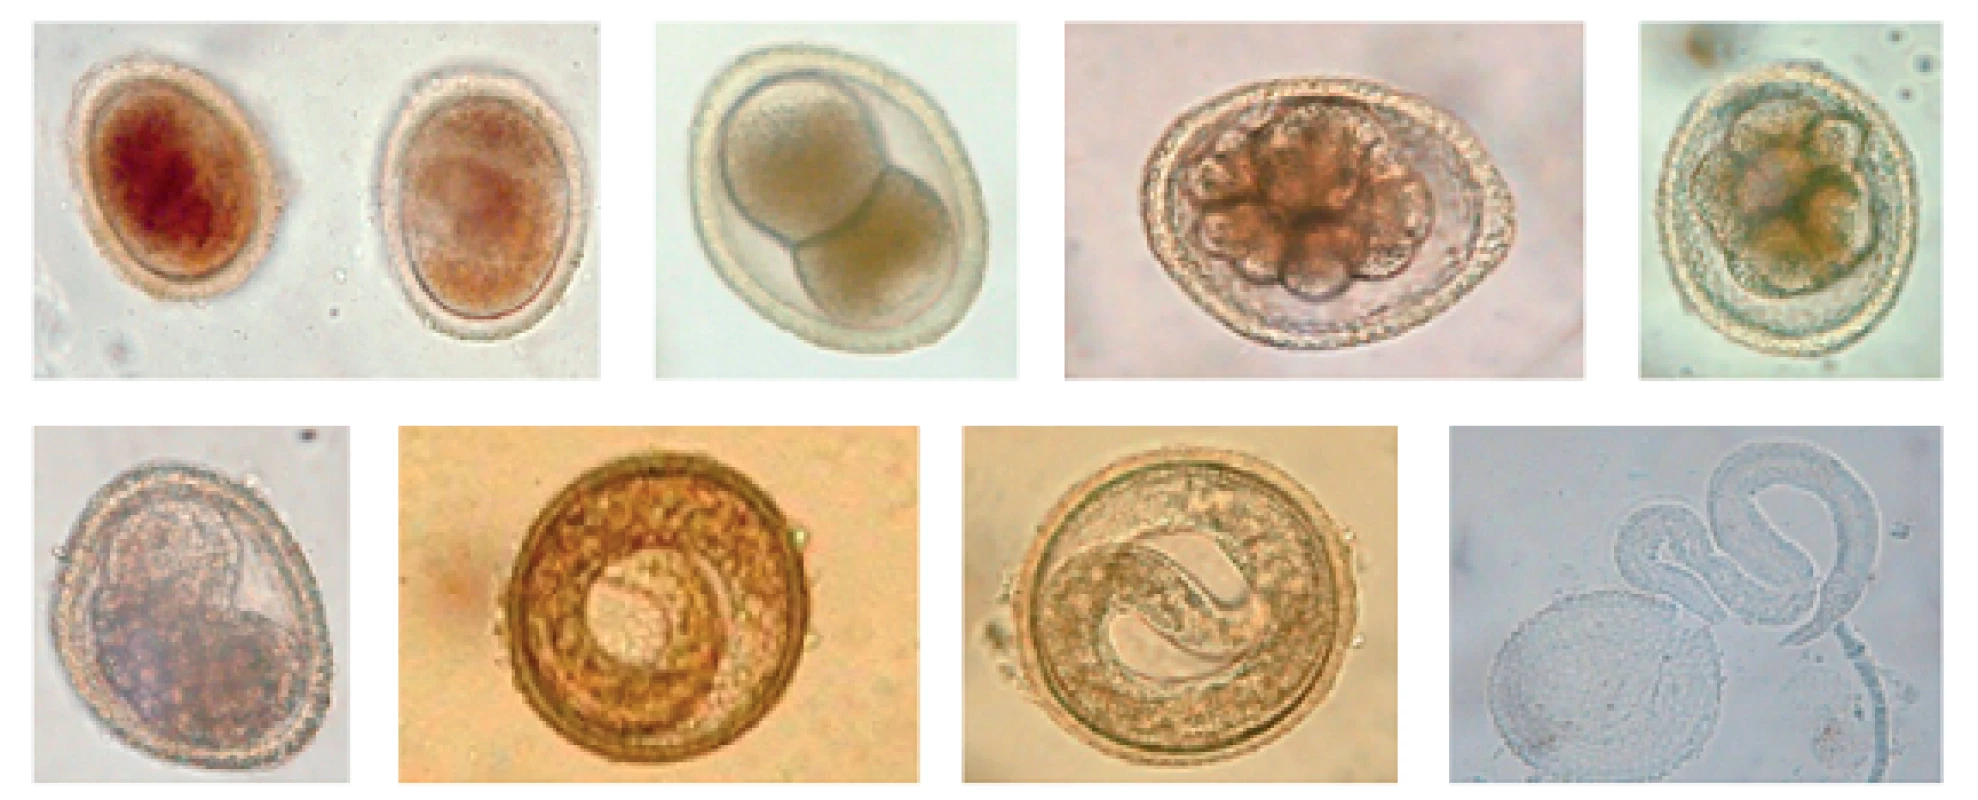 Vývoj larvy &lt;i&gt;Toxocara canis&lt;/i&gt; (foto Mgr. Bílková Fránková a MVDr. Romana Mašková)